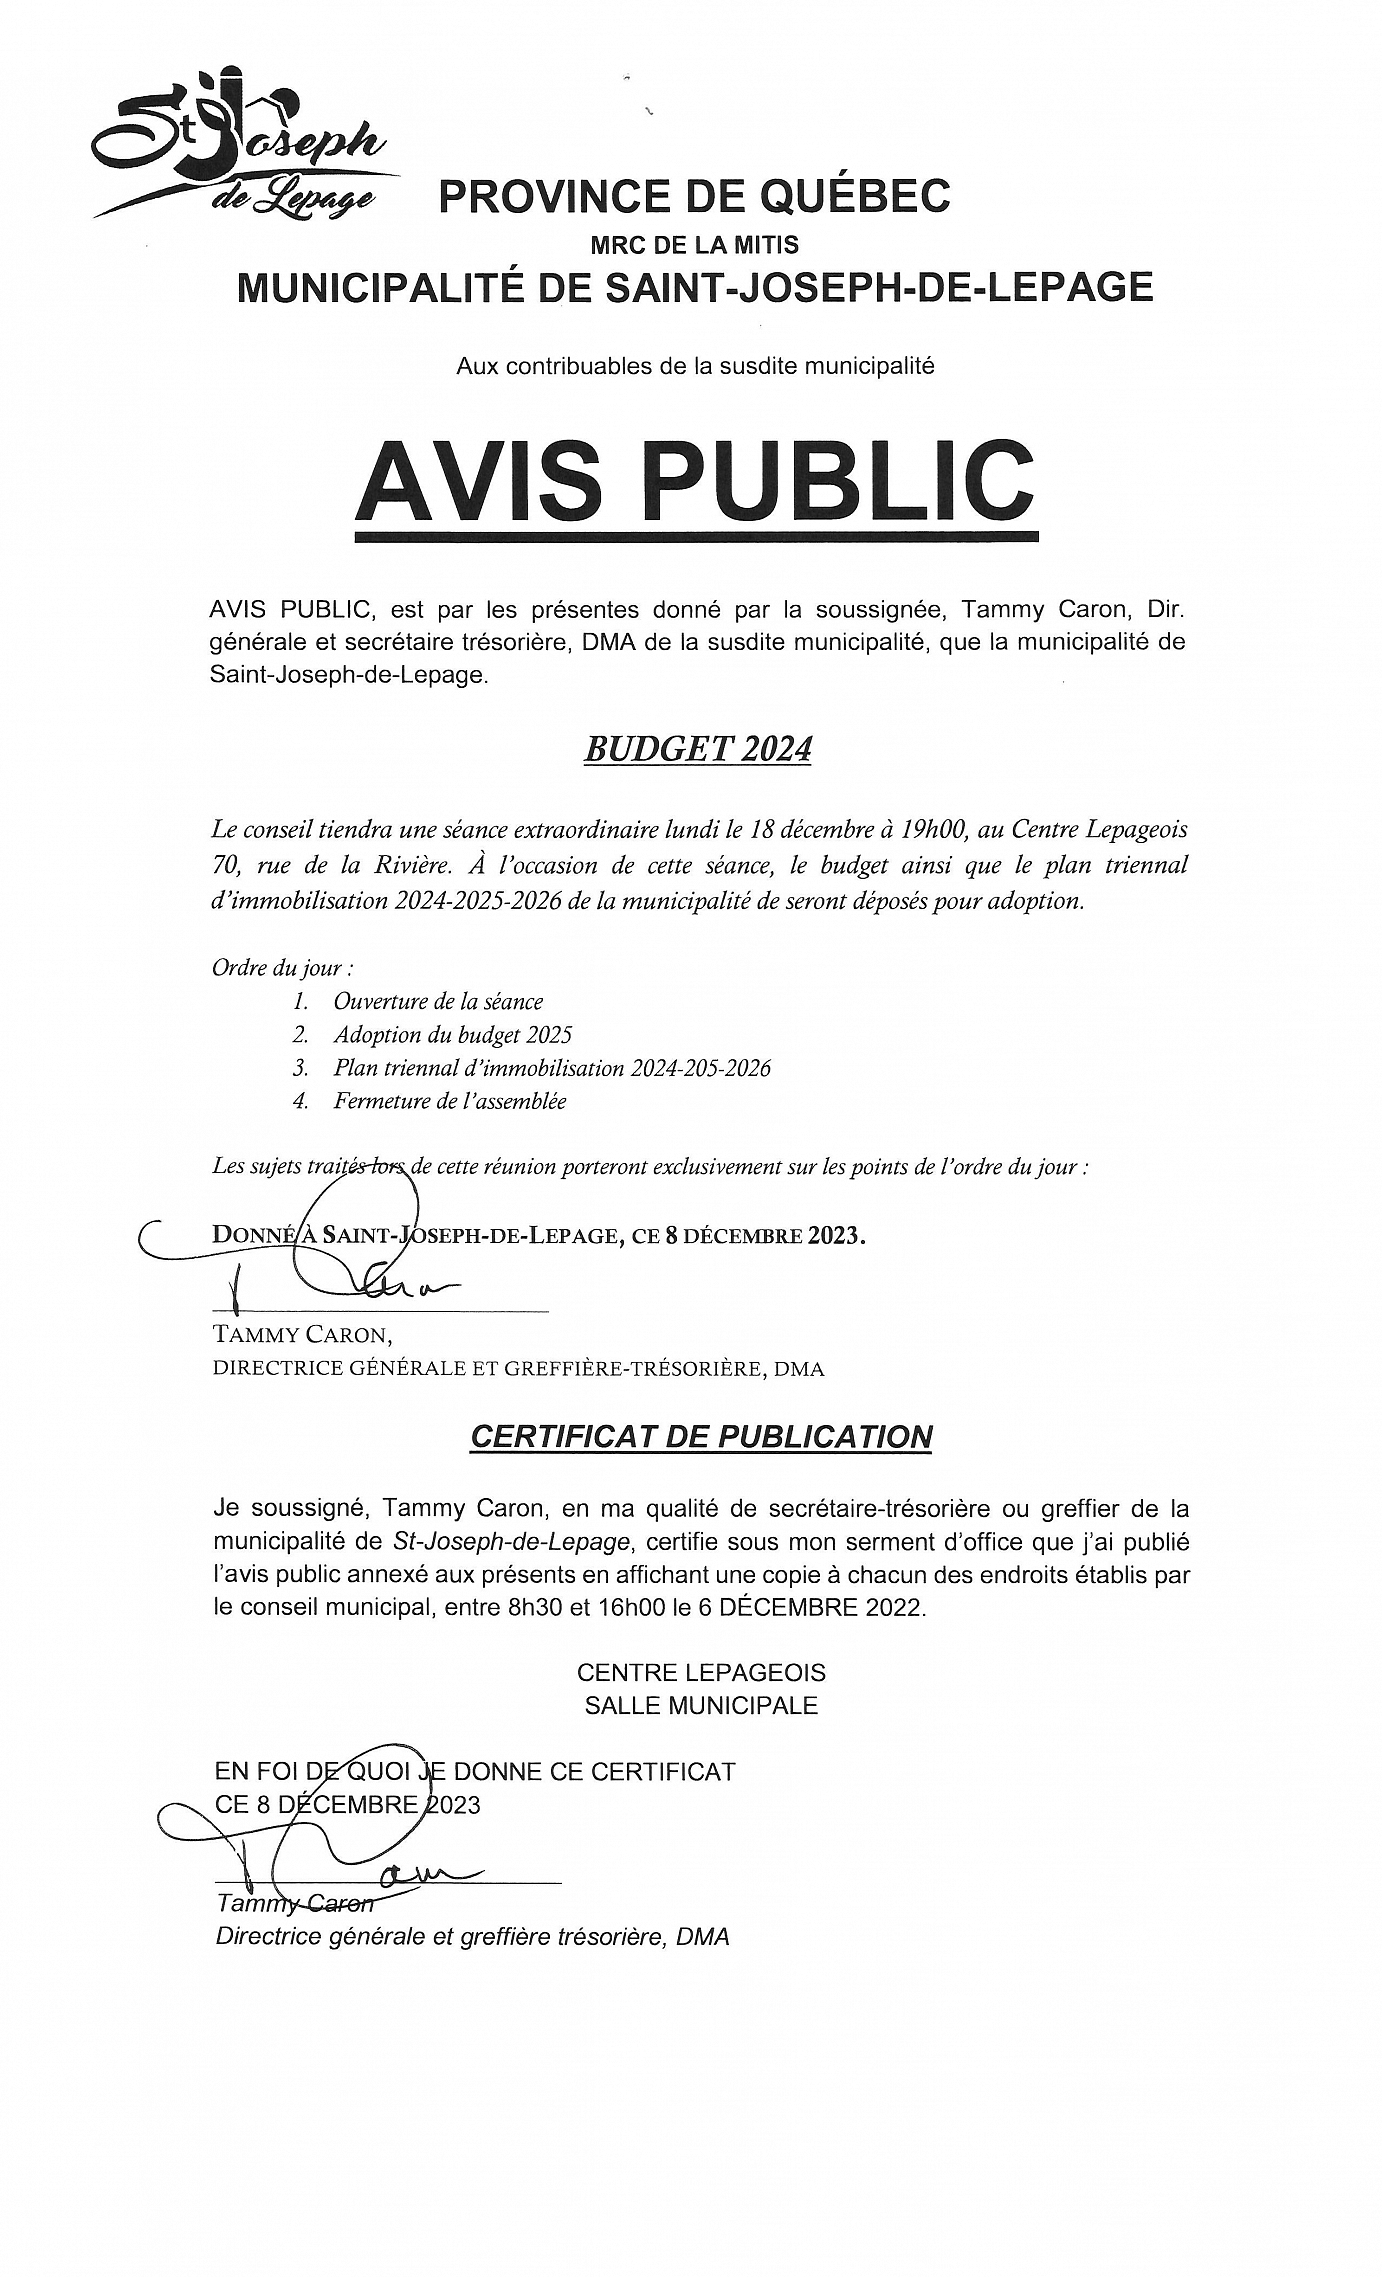 AVIS PUBLIC BUDGET 2024